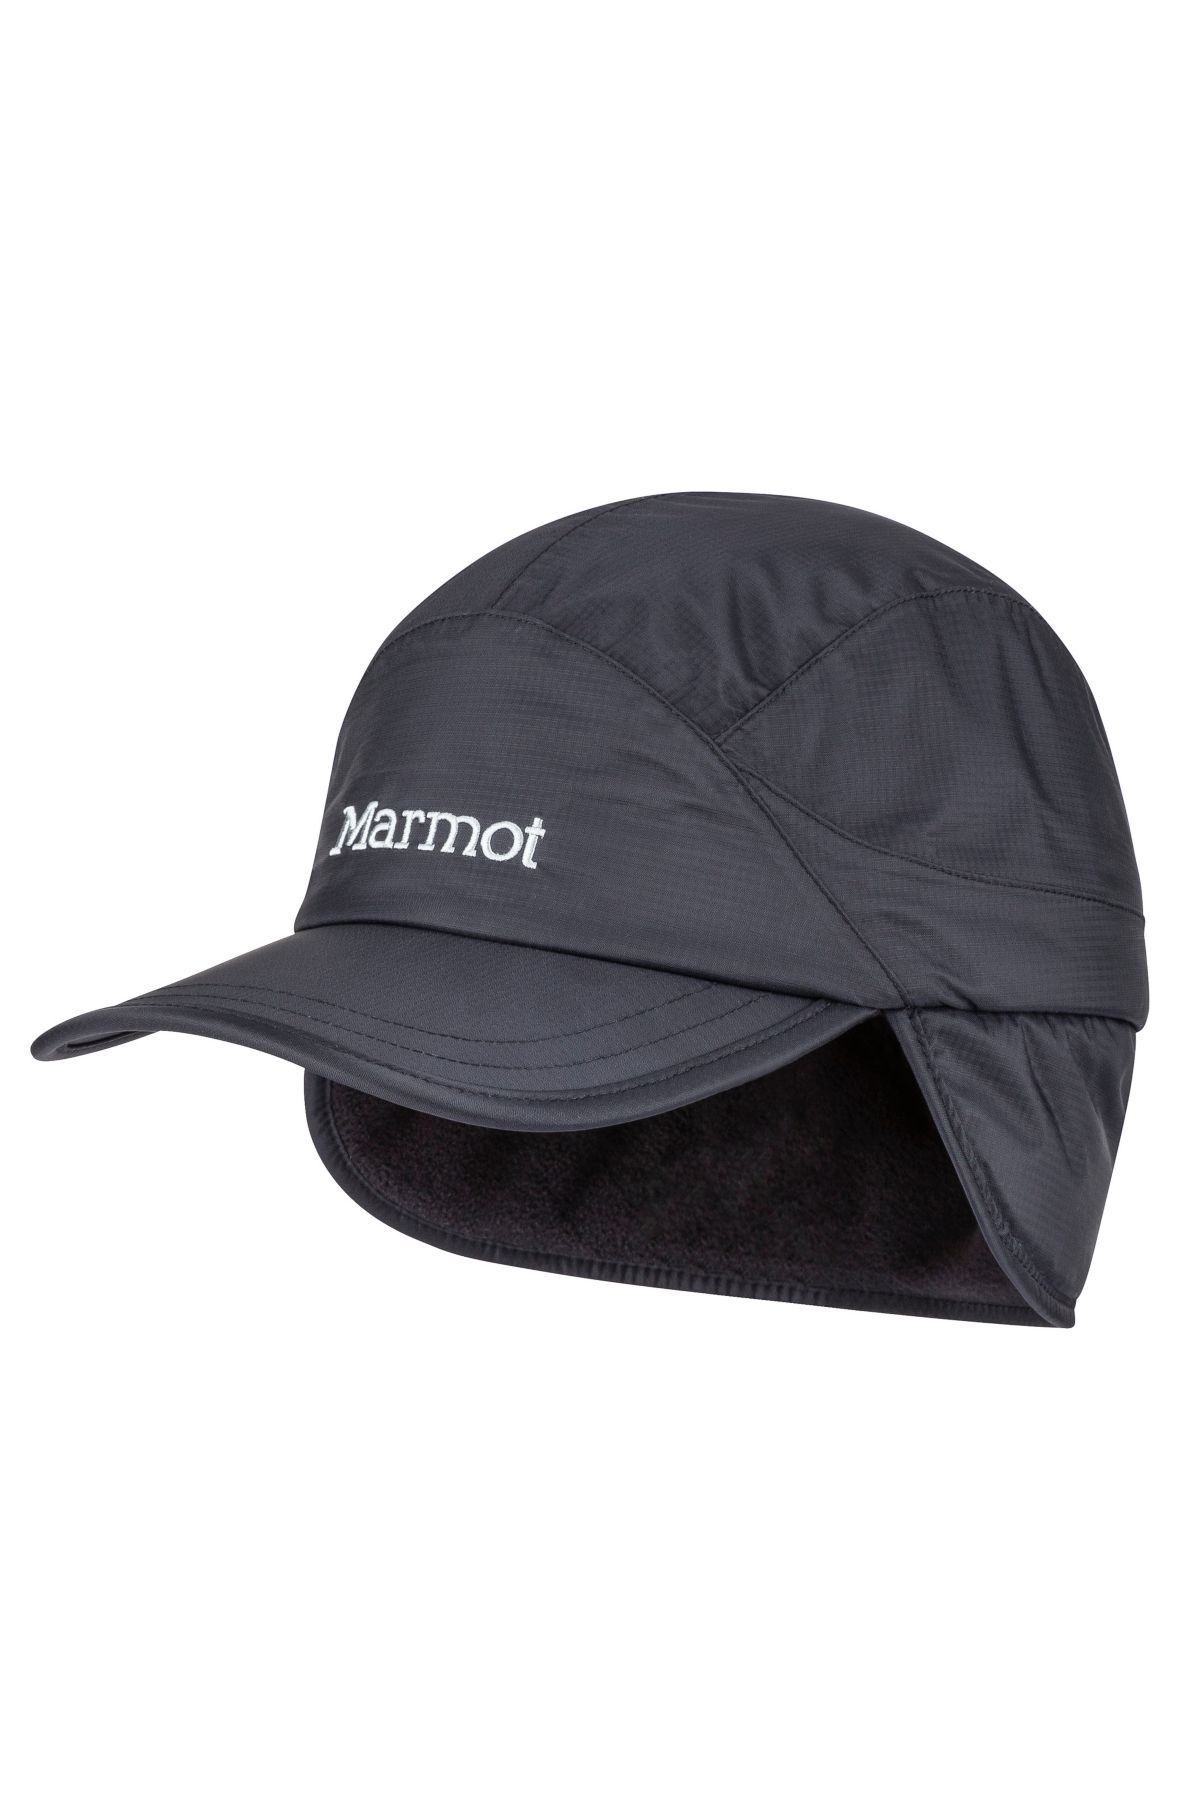 Adjustable Insulated Cap for Outdoor Marmot PreCip Eco Insul Baseball Cap Sports and Travel 